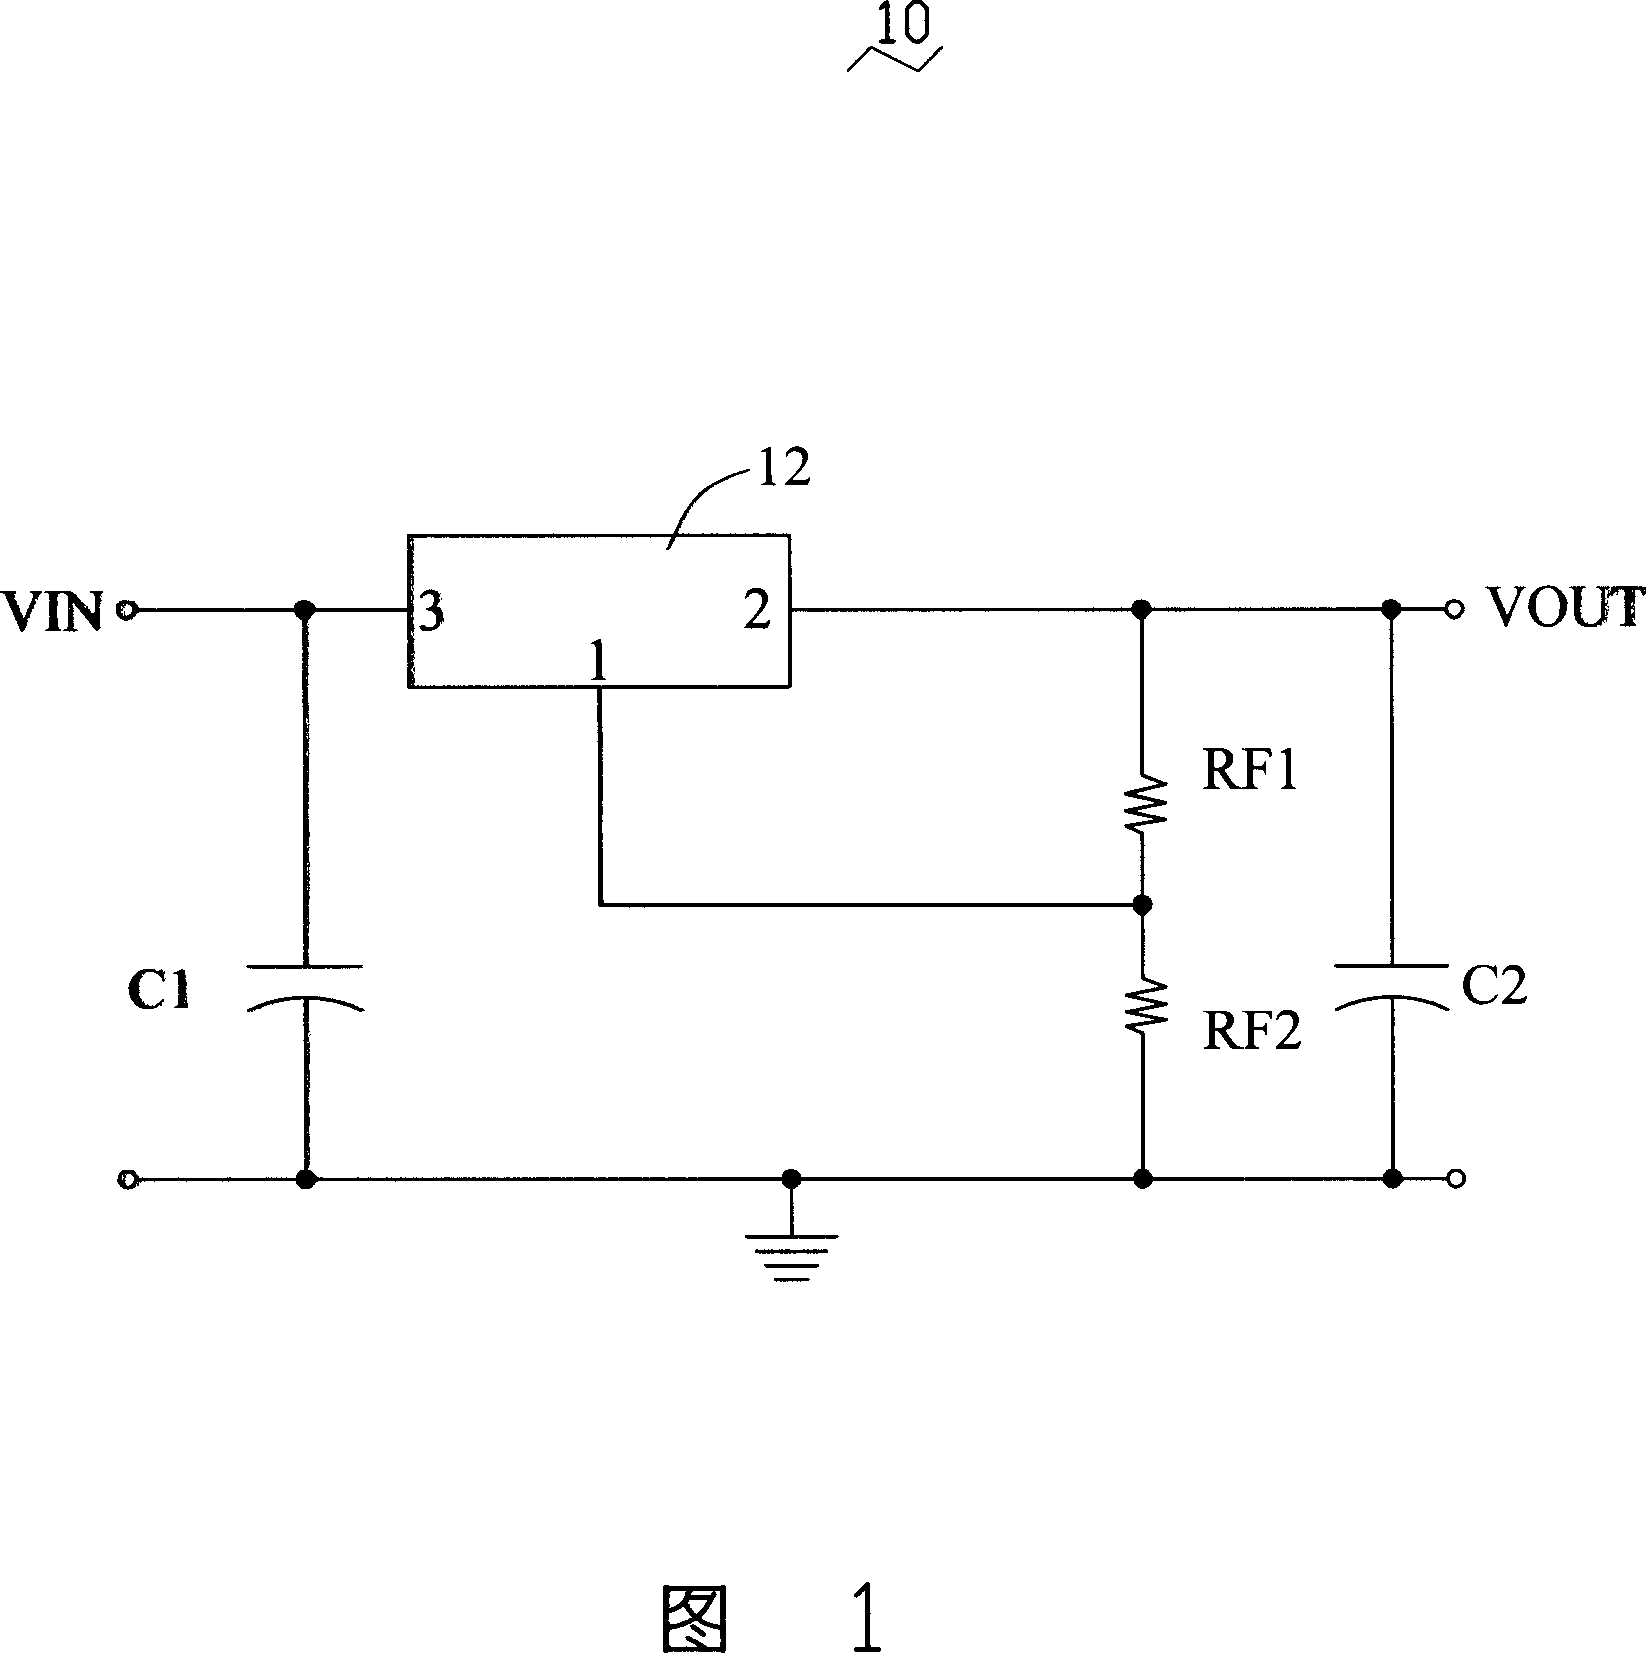 Variable DC voltage source